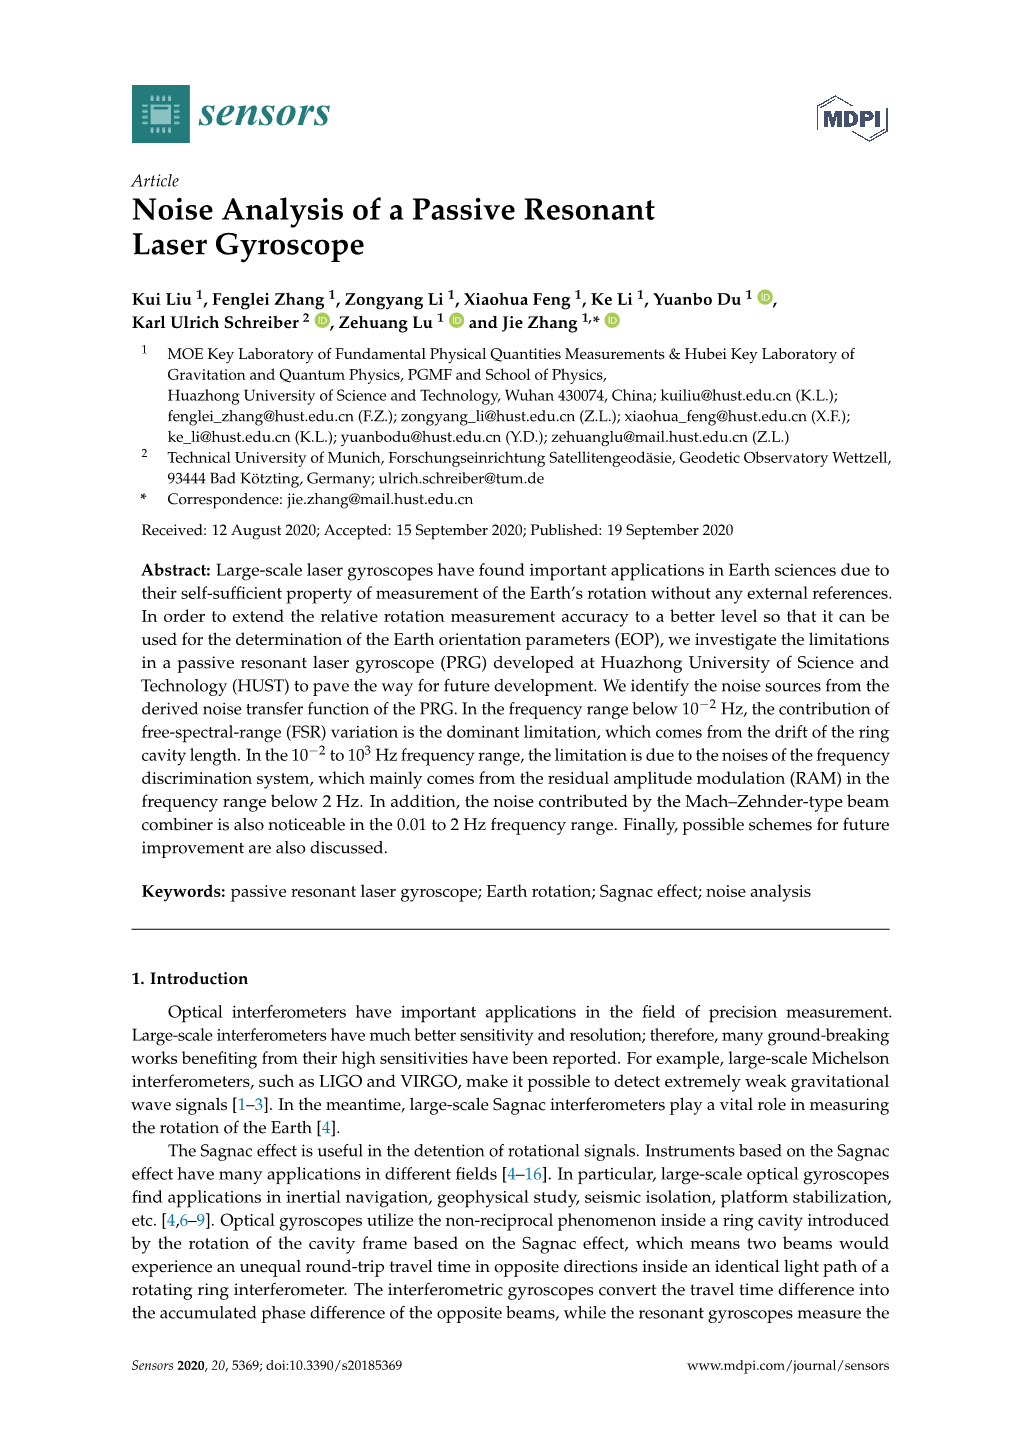 Noise Analysis of a Passive Resonant Laser Gyroscope